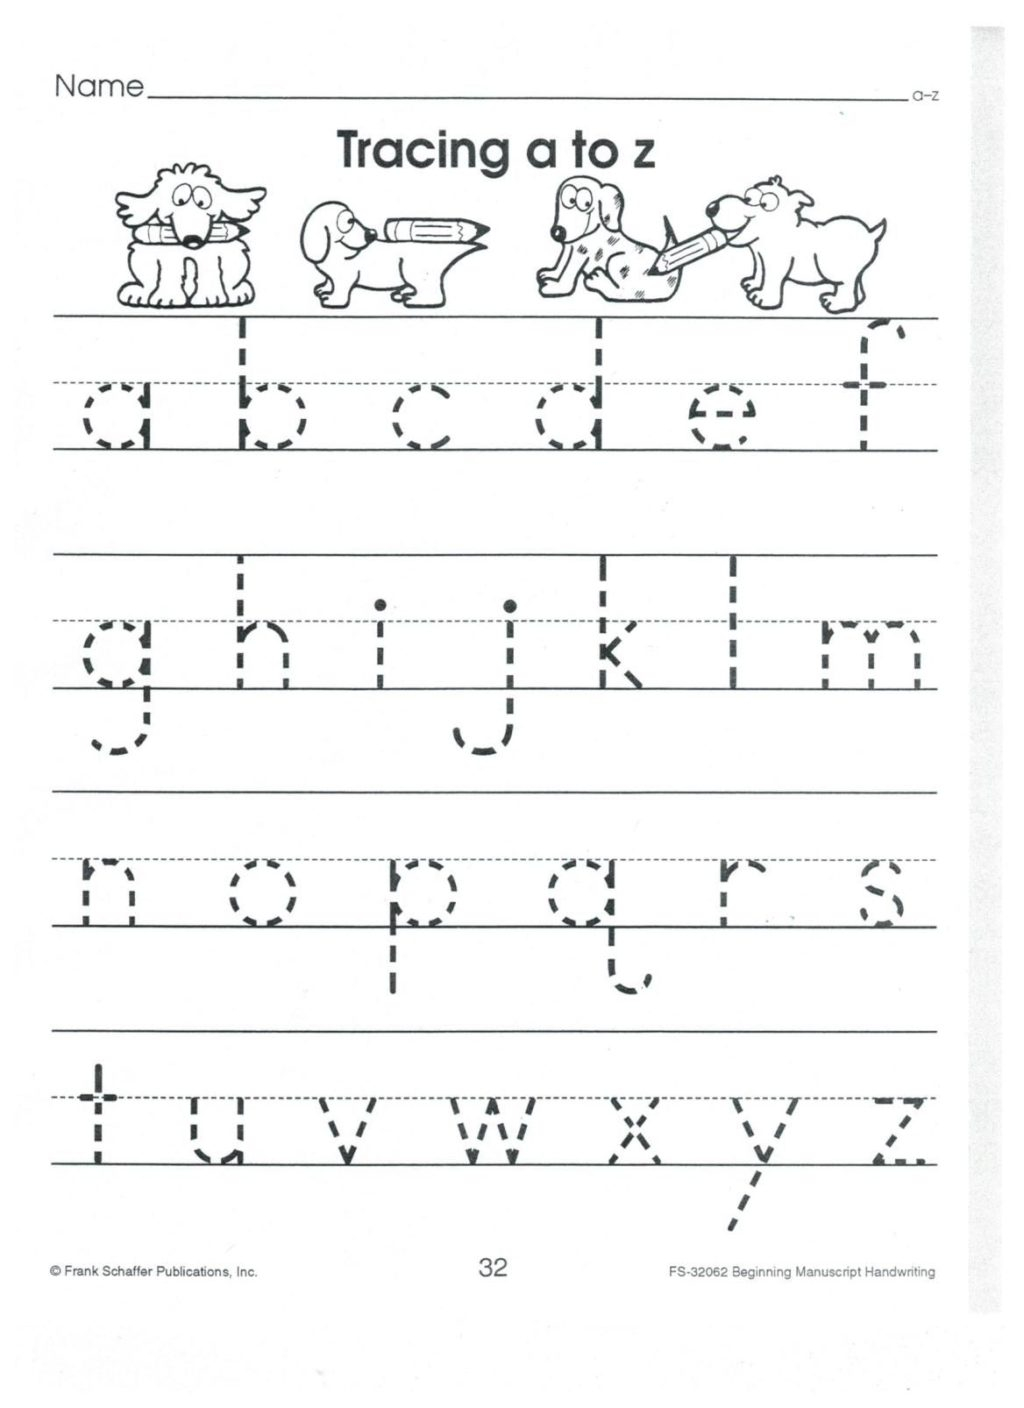 Worksheet ~ English Print To Z Lower Case Alphabet Tracing within Alphabet Tracing Lowercase